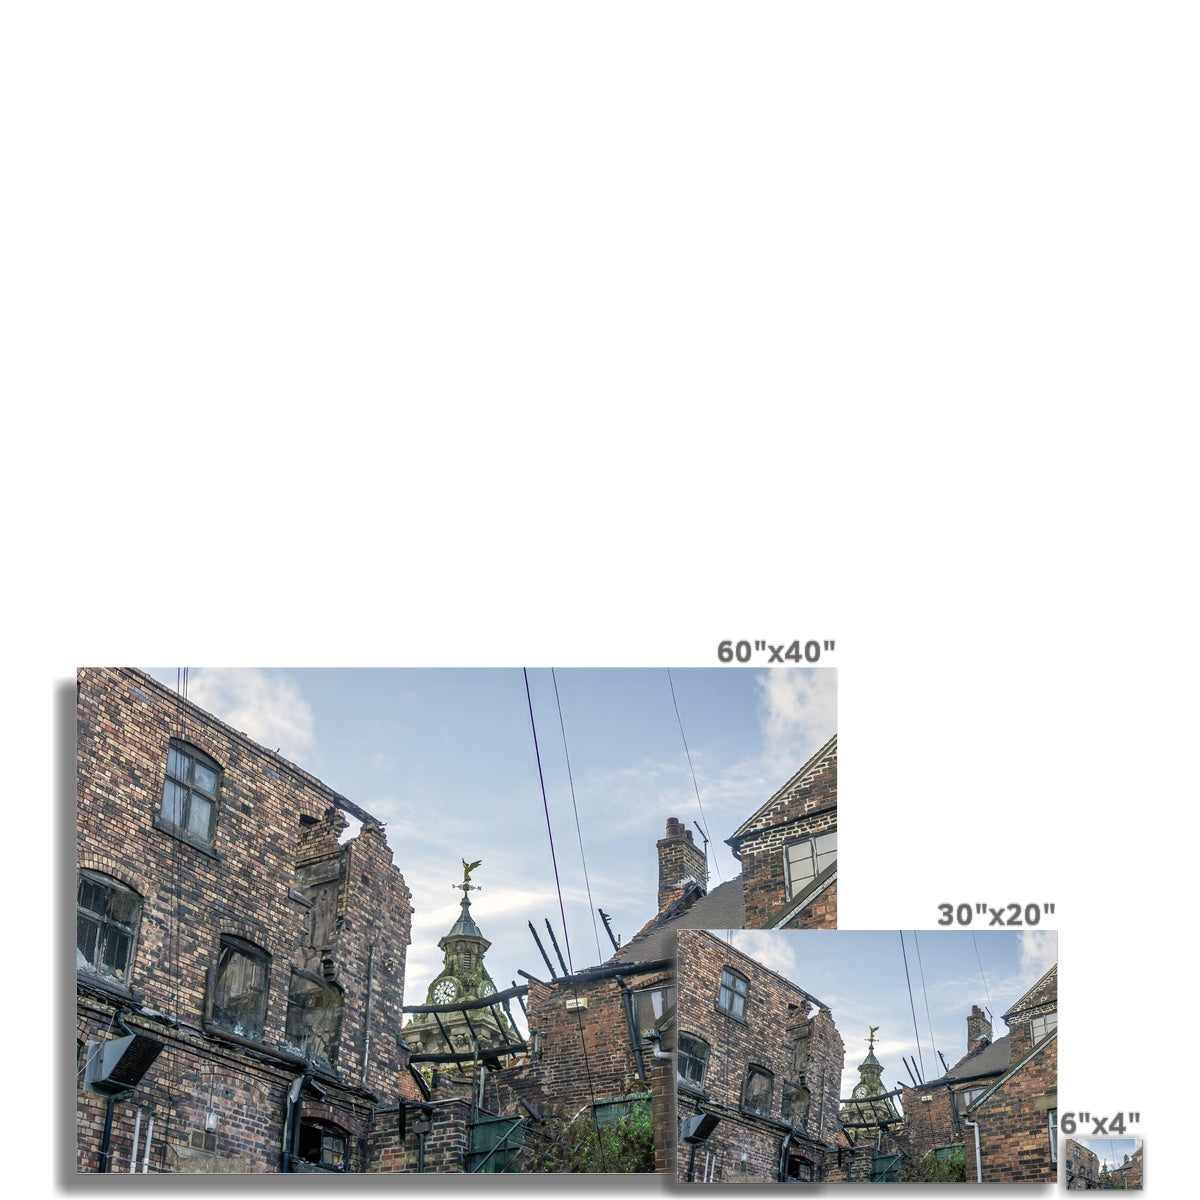 Burslem Town Hall, viewed through the ruin of The Leopard, Burslem Hahnemühle Photo Rag Print